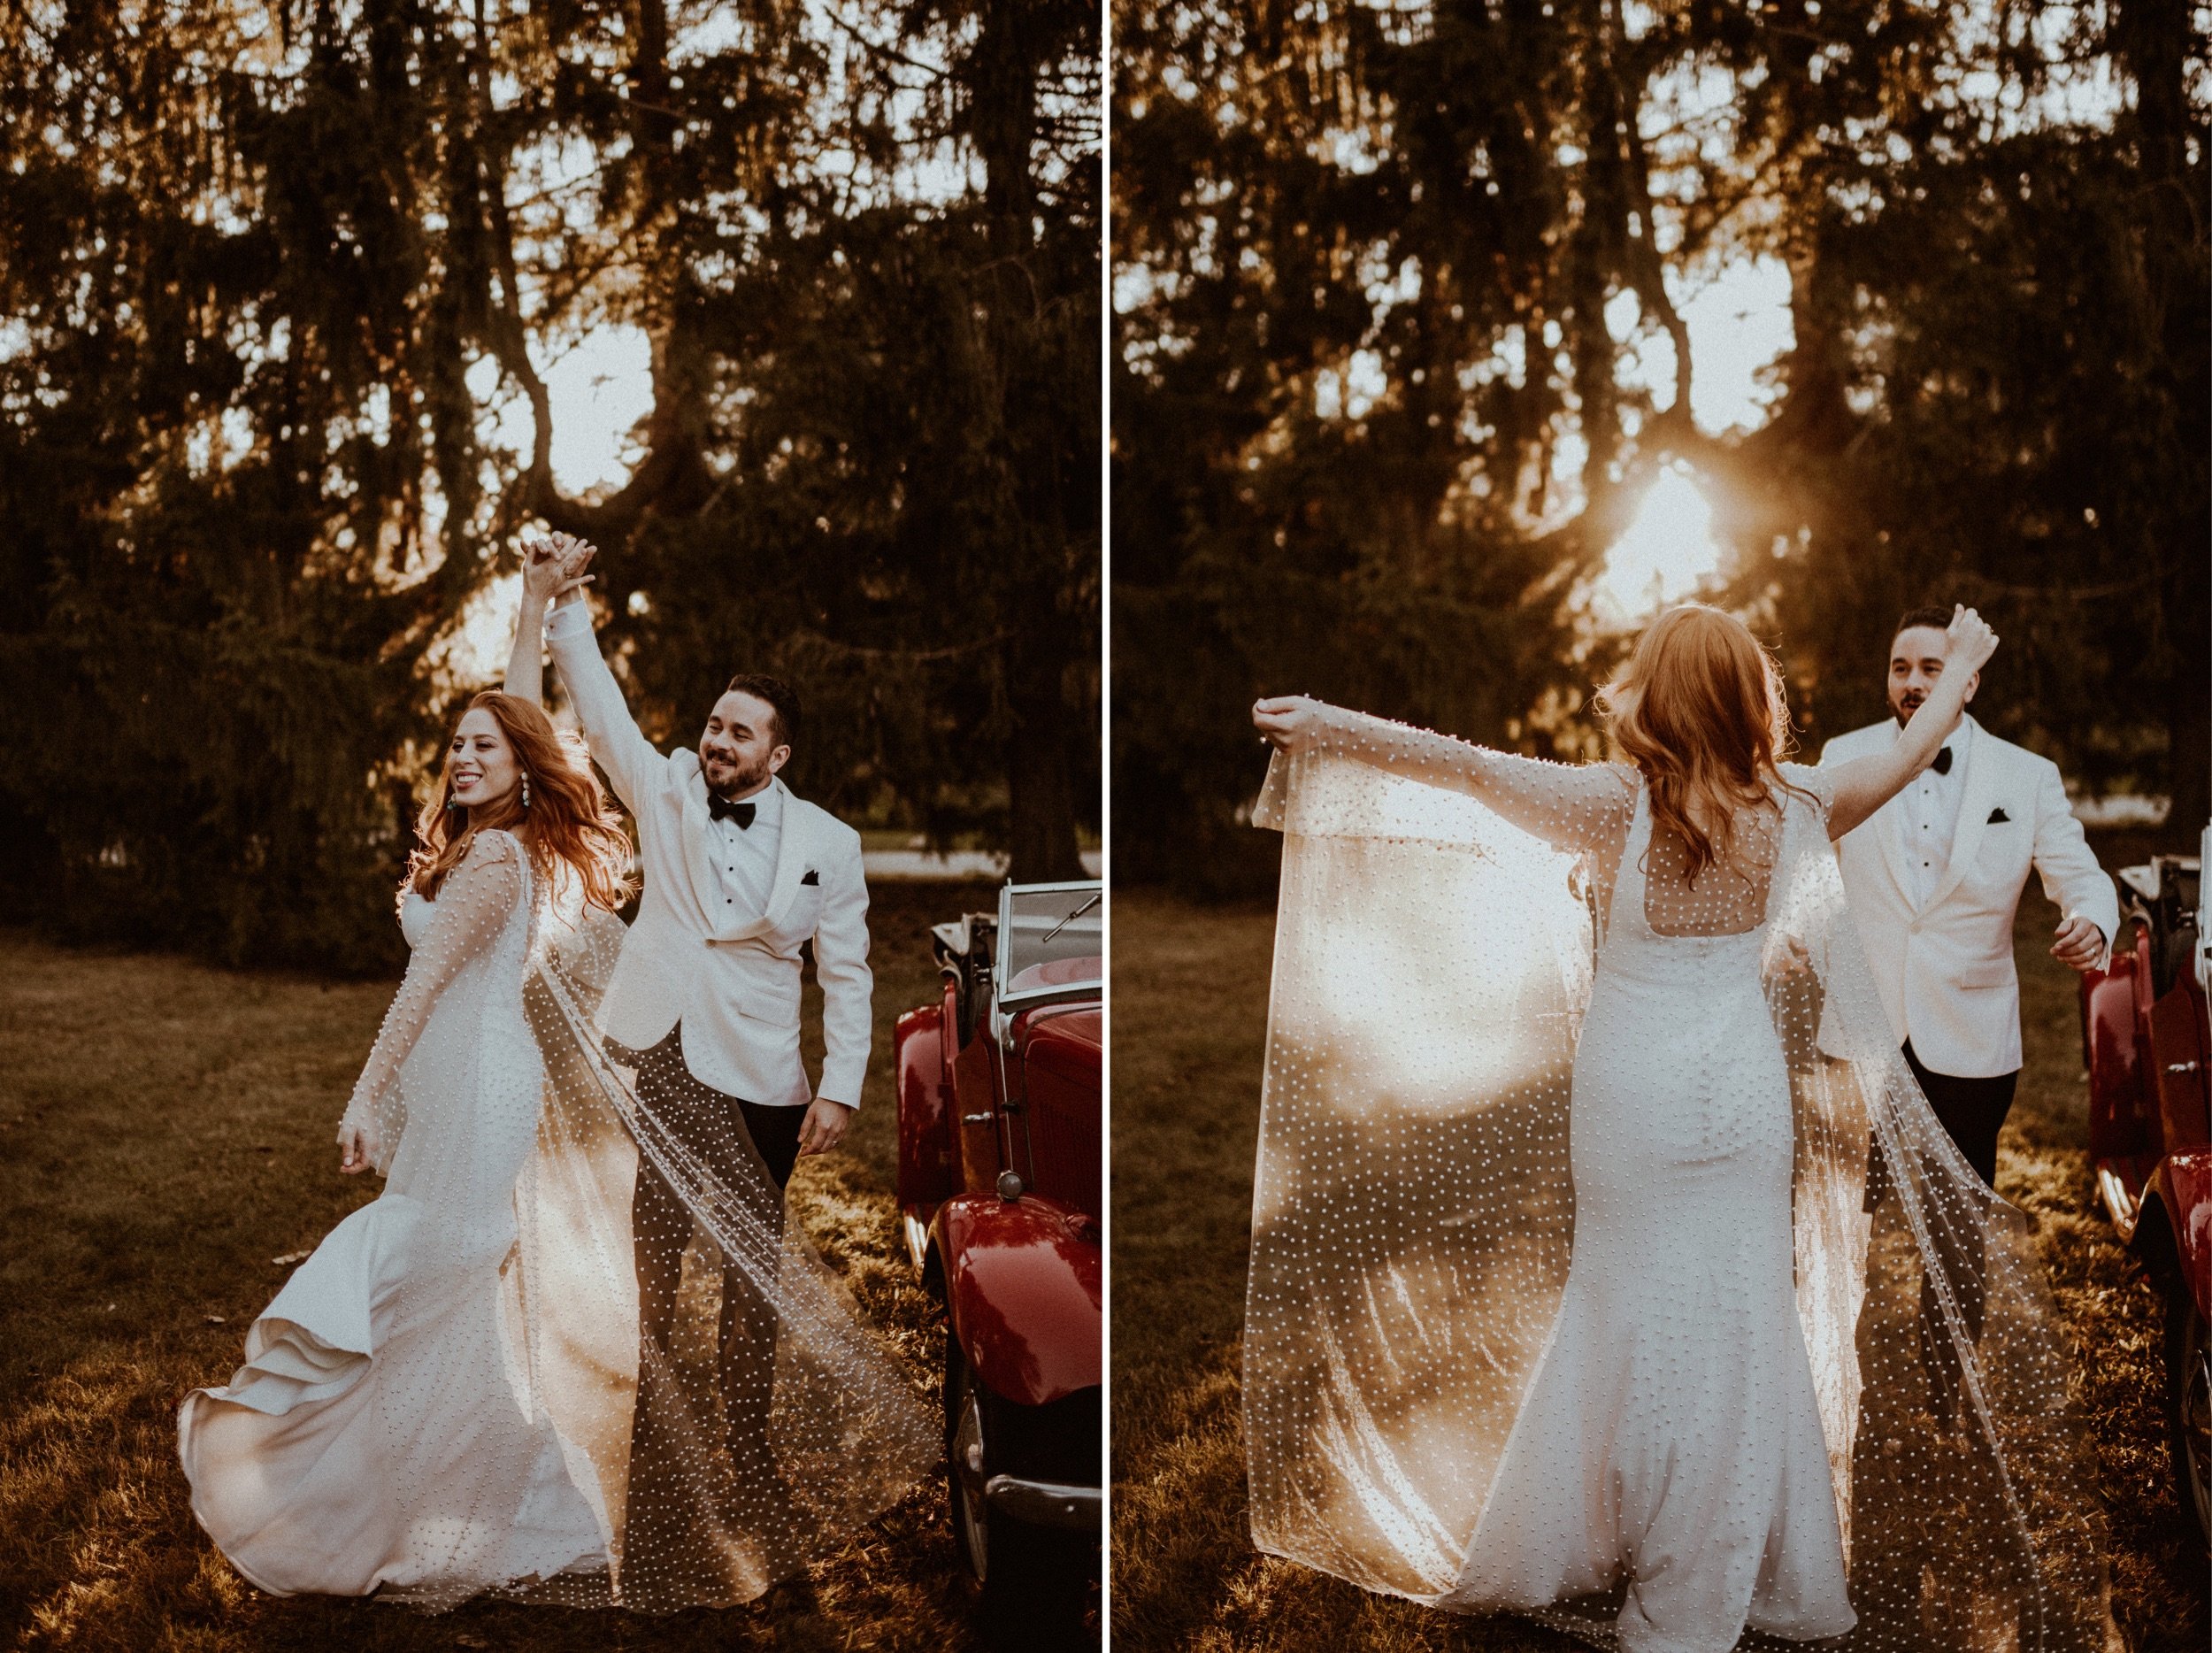 088_Timeless Backyard Wedding in Rhode Island - Vanessa Alves Photography.jpg